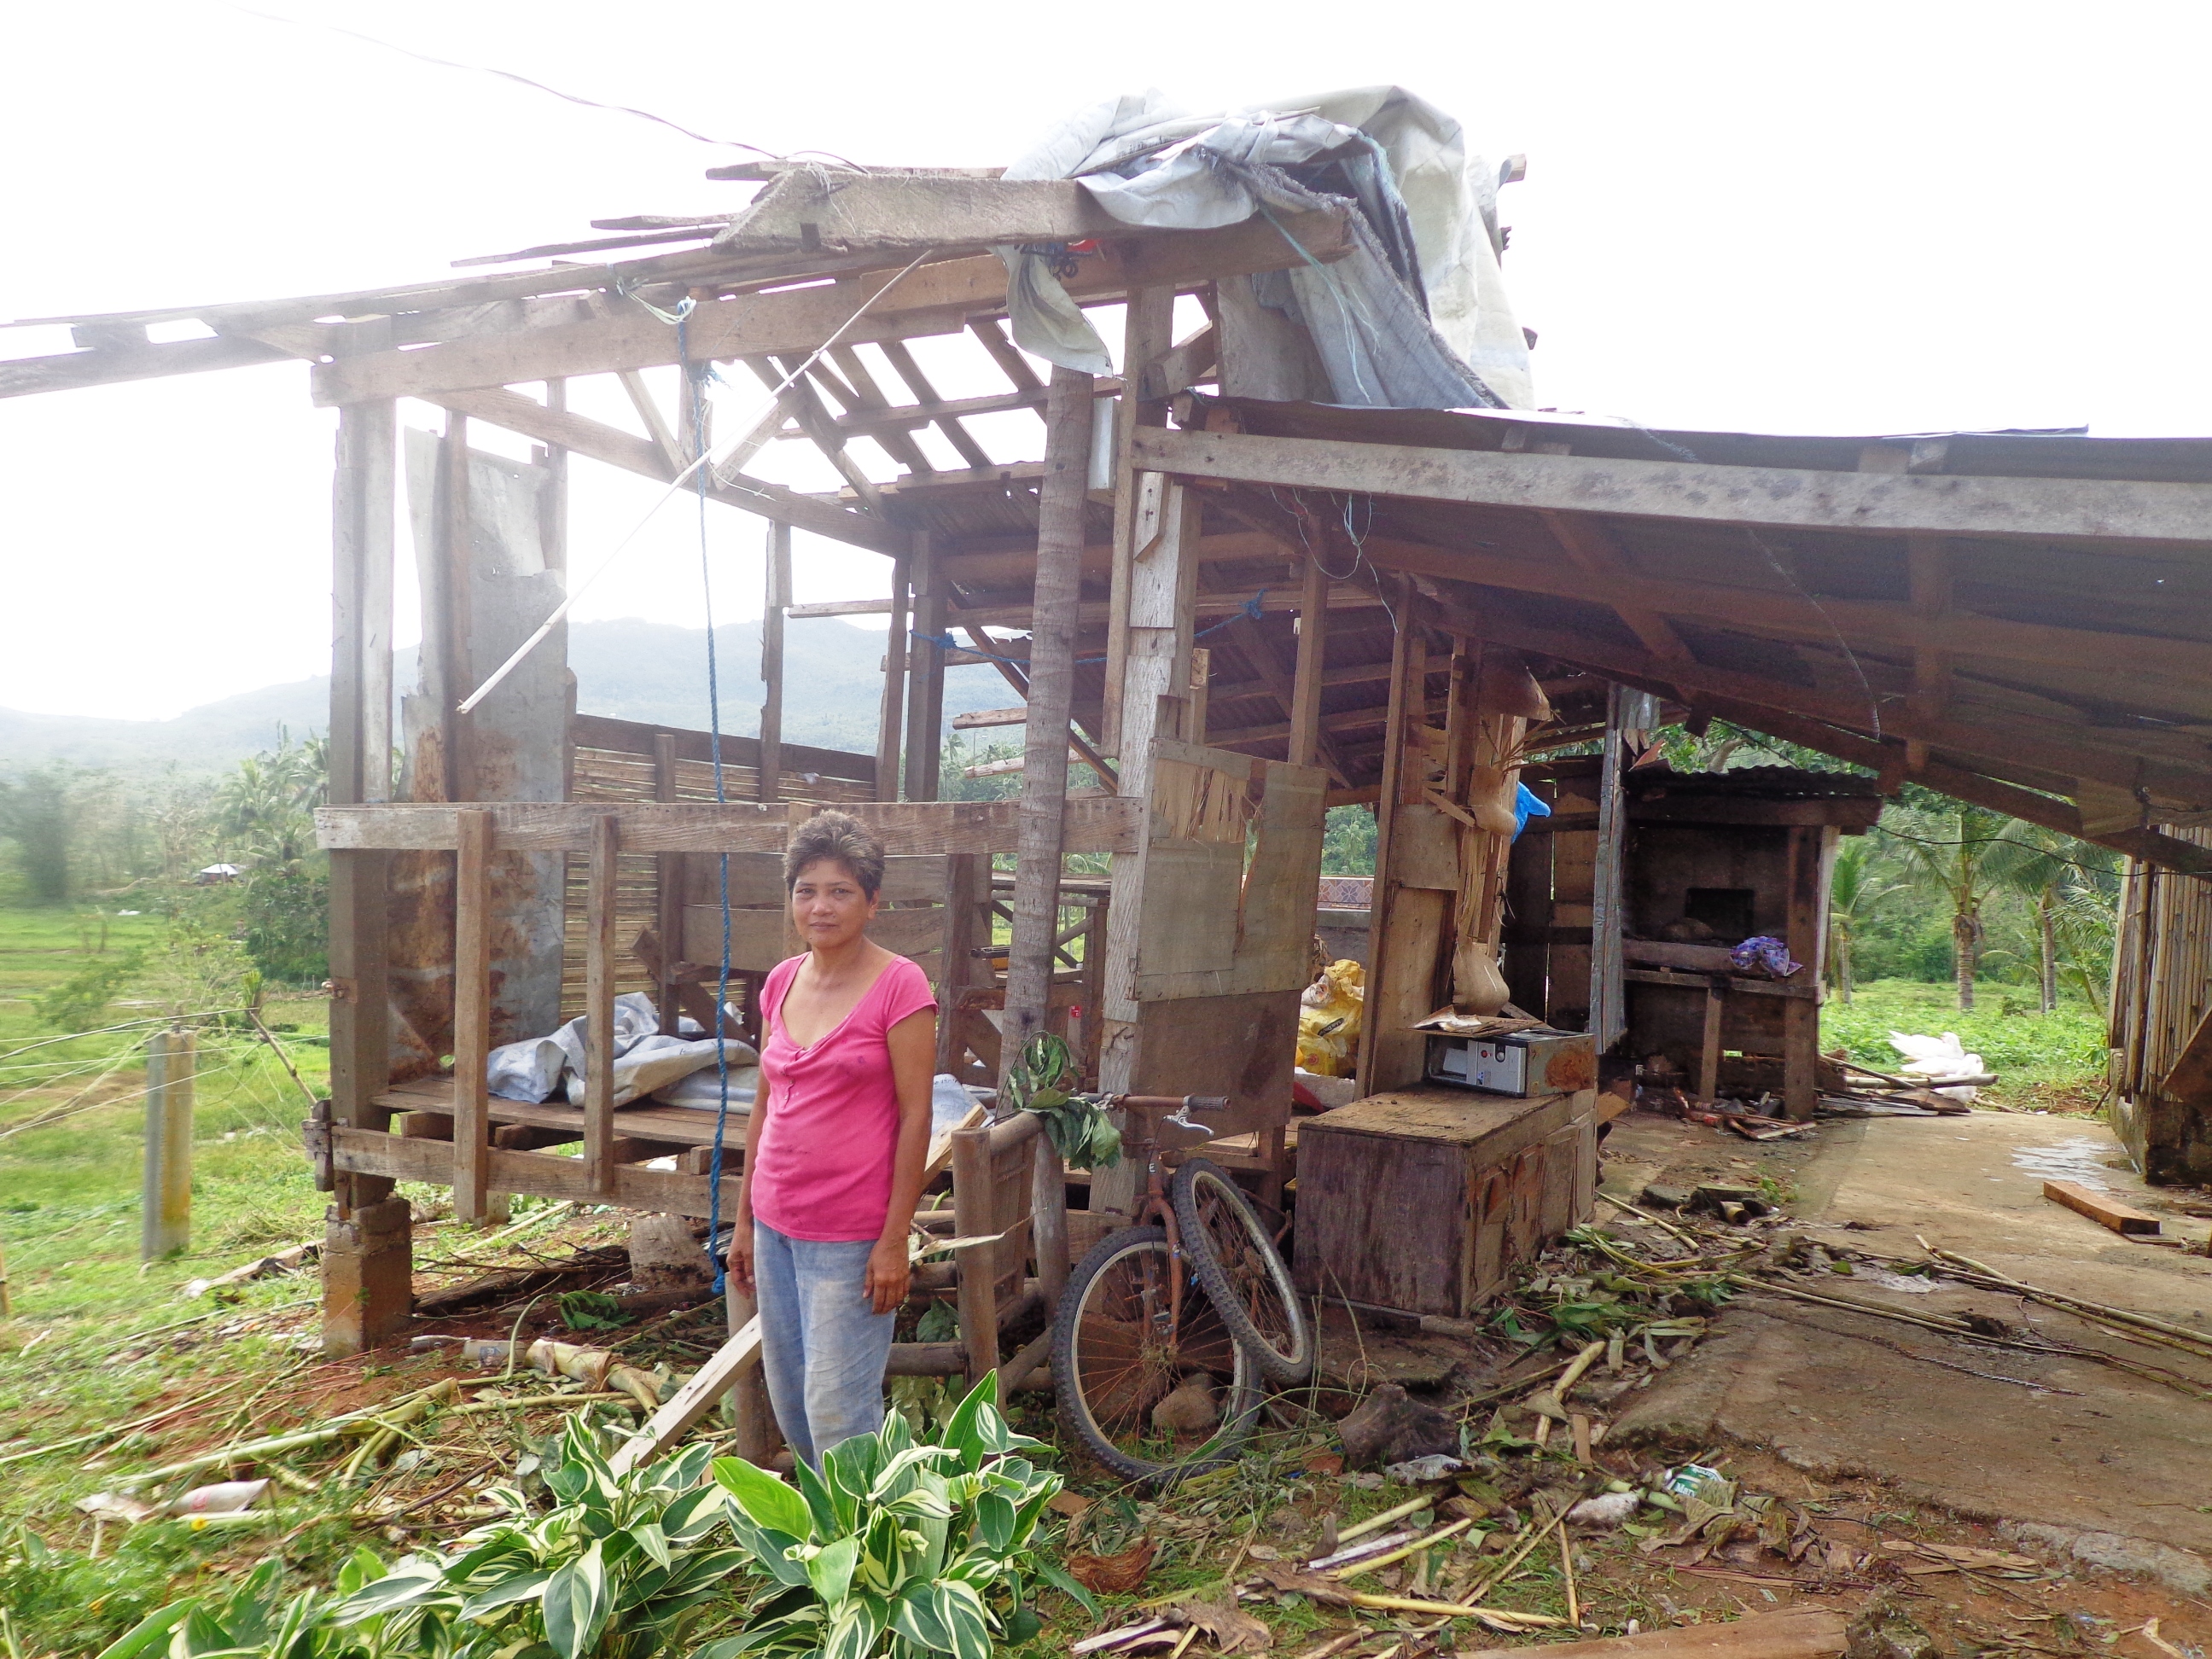 Heifer International Philippines project participant surveys her damaged home